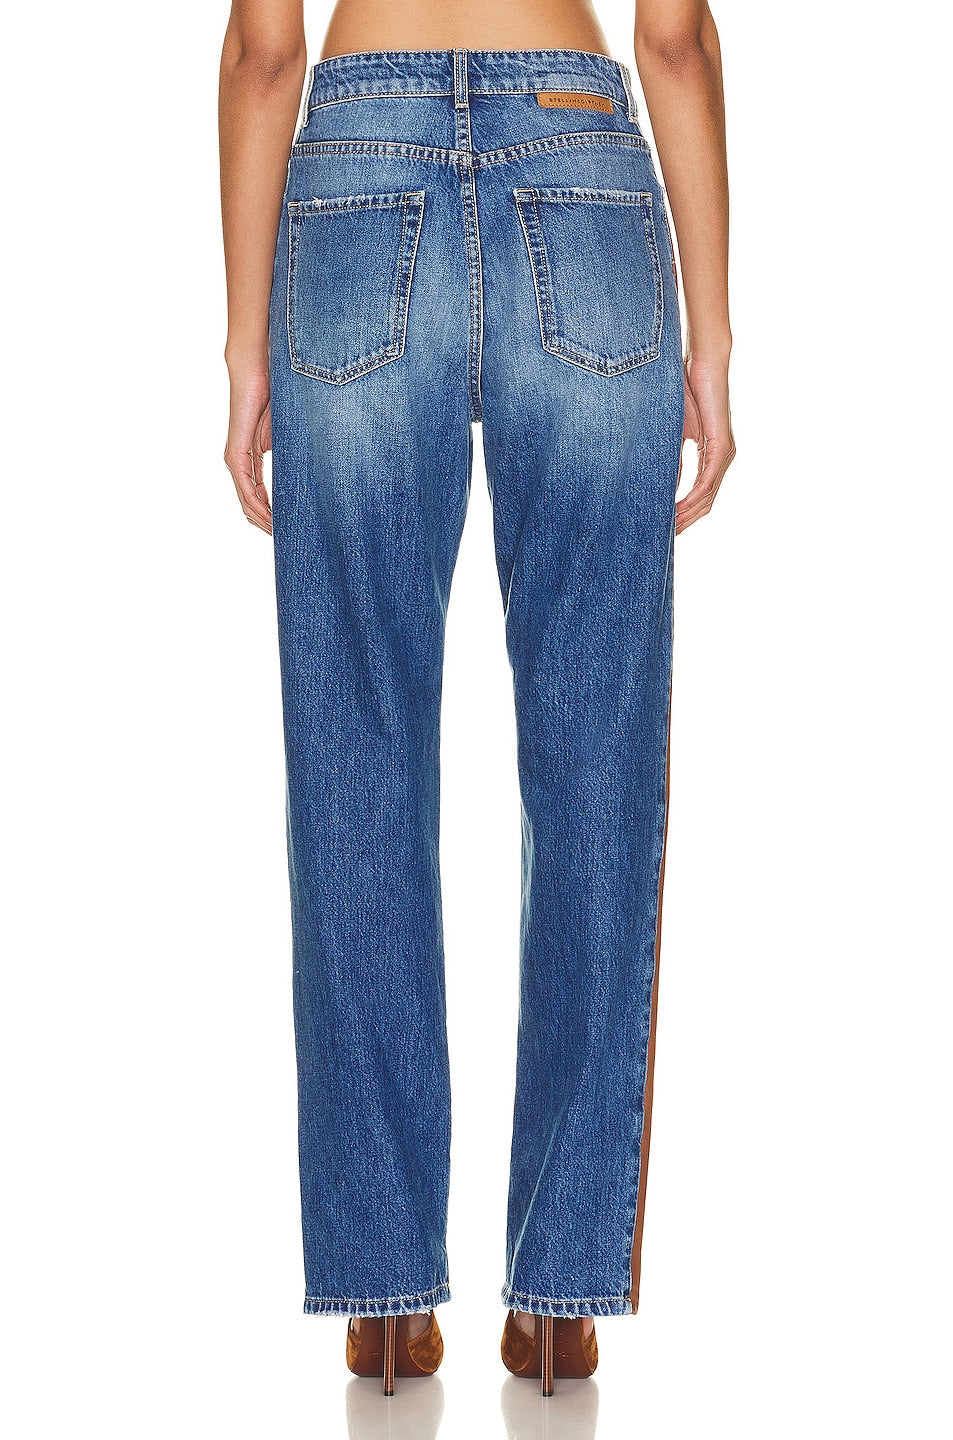 Stella McCartney Chap Jeans in Mid Blue Vintage SIZE 27